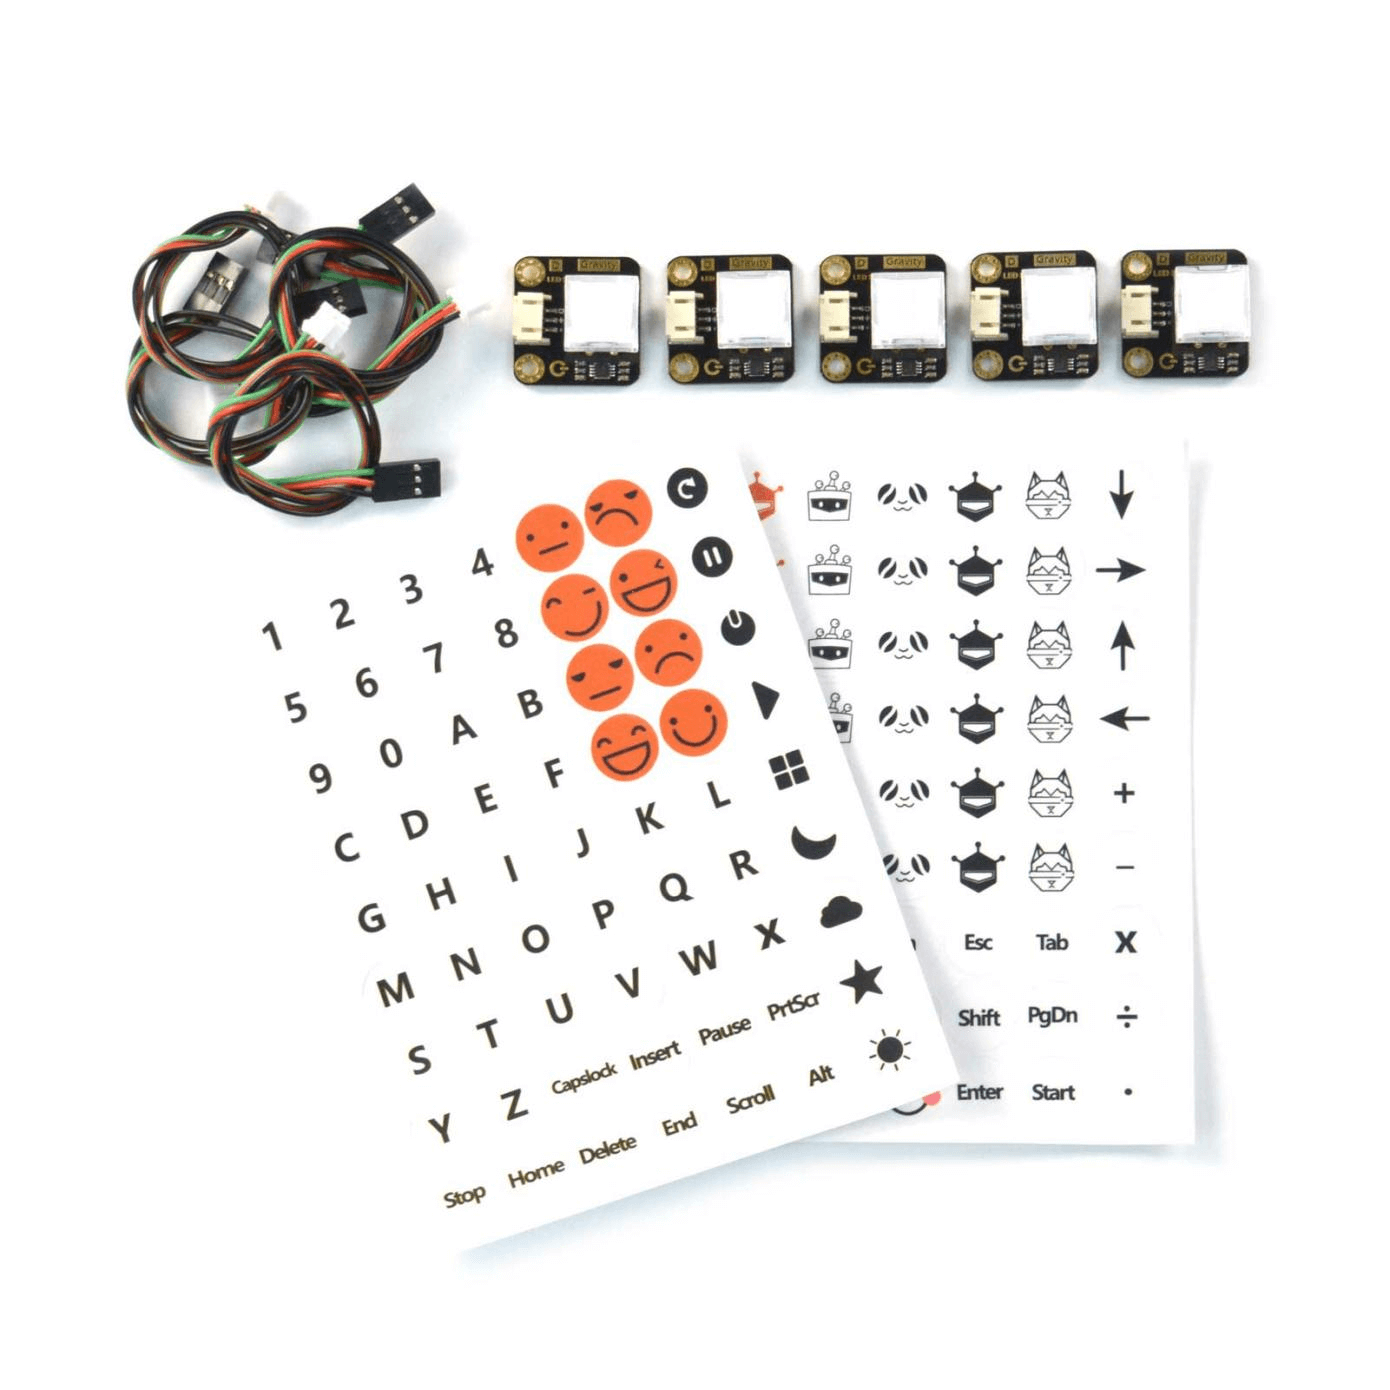 Gravity: LED Switch Kit